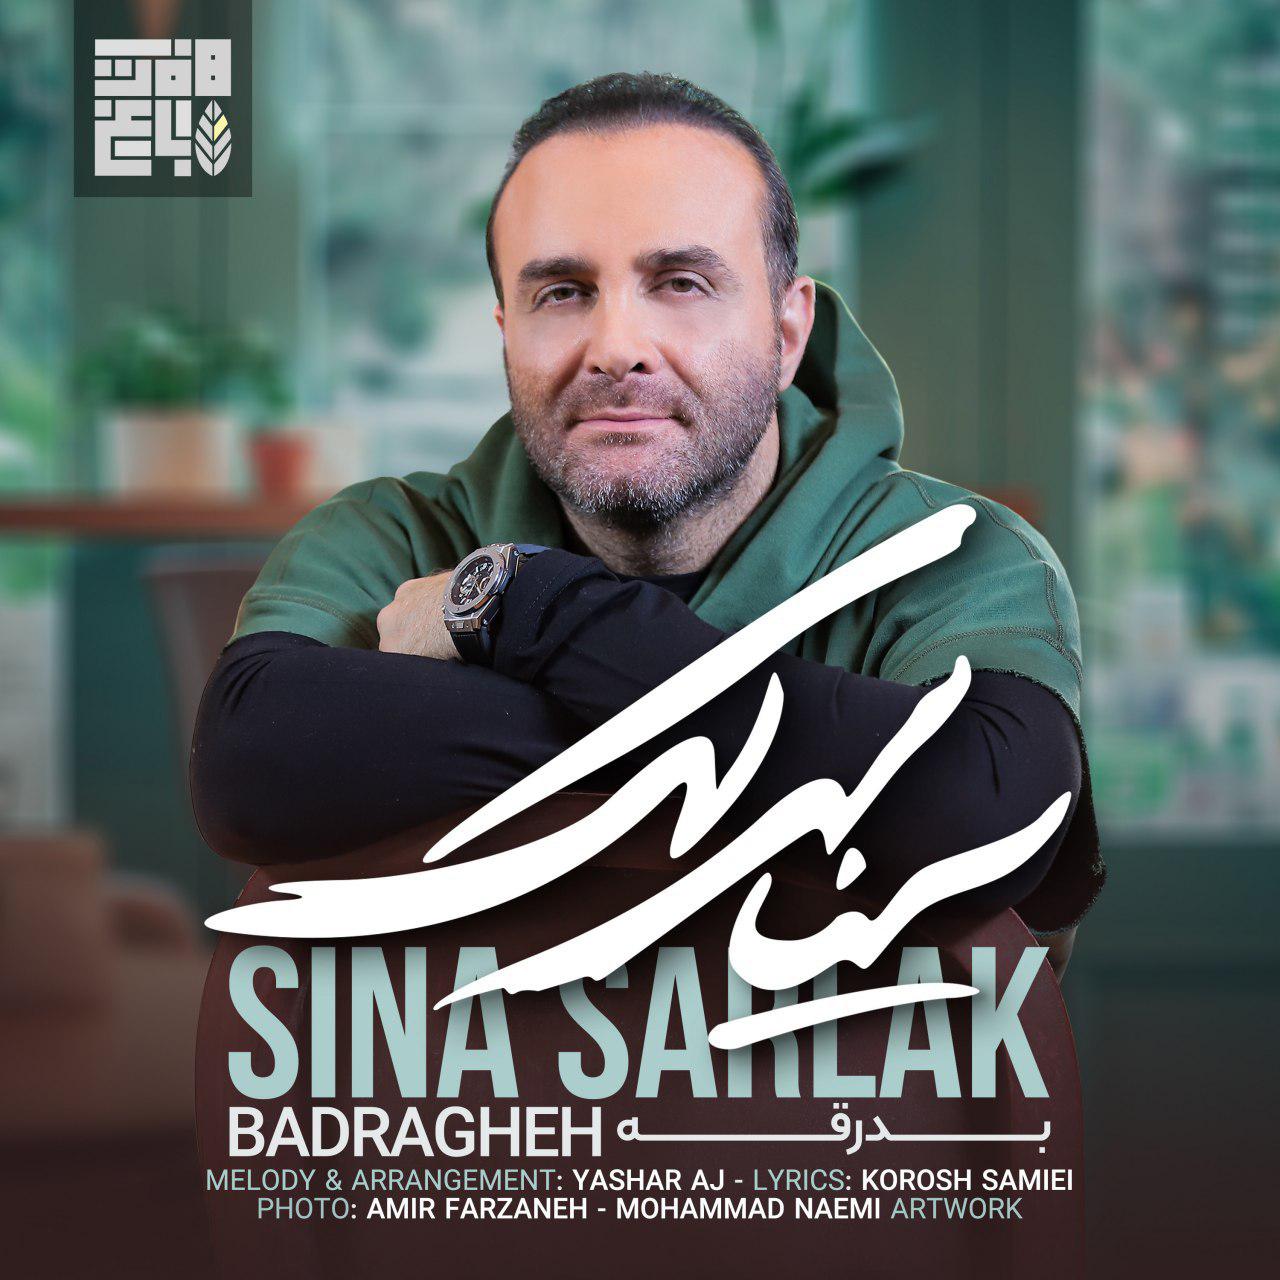  دانلود آهنگ جدید سینا سرلک - بدرقه | Download New Music By Sina Sarlak - Badragheh